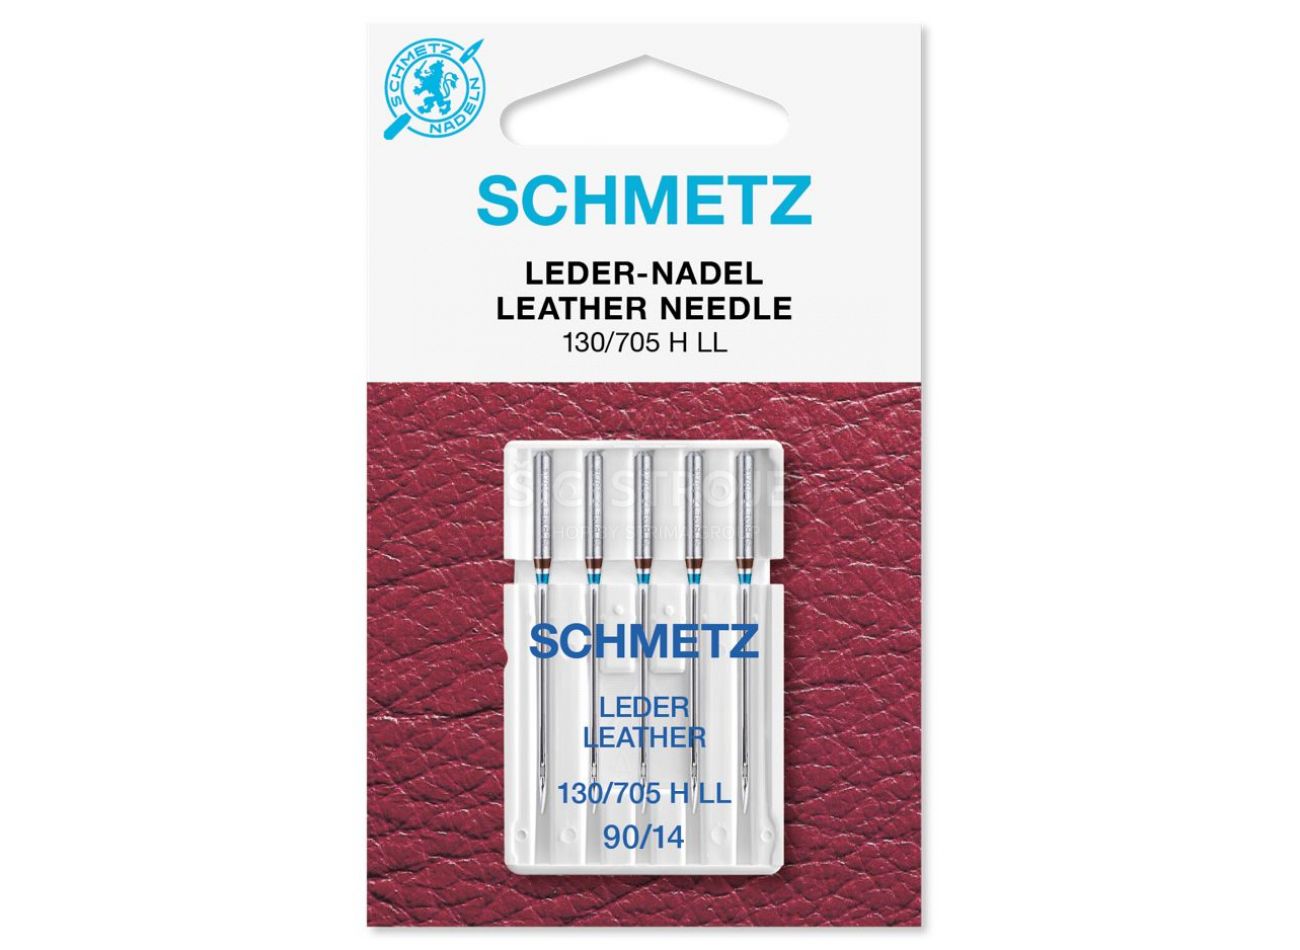 Schmetz ihly na kožu 130/705 H LL VDS 90